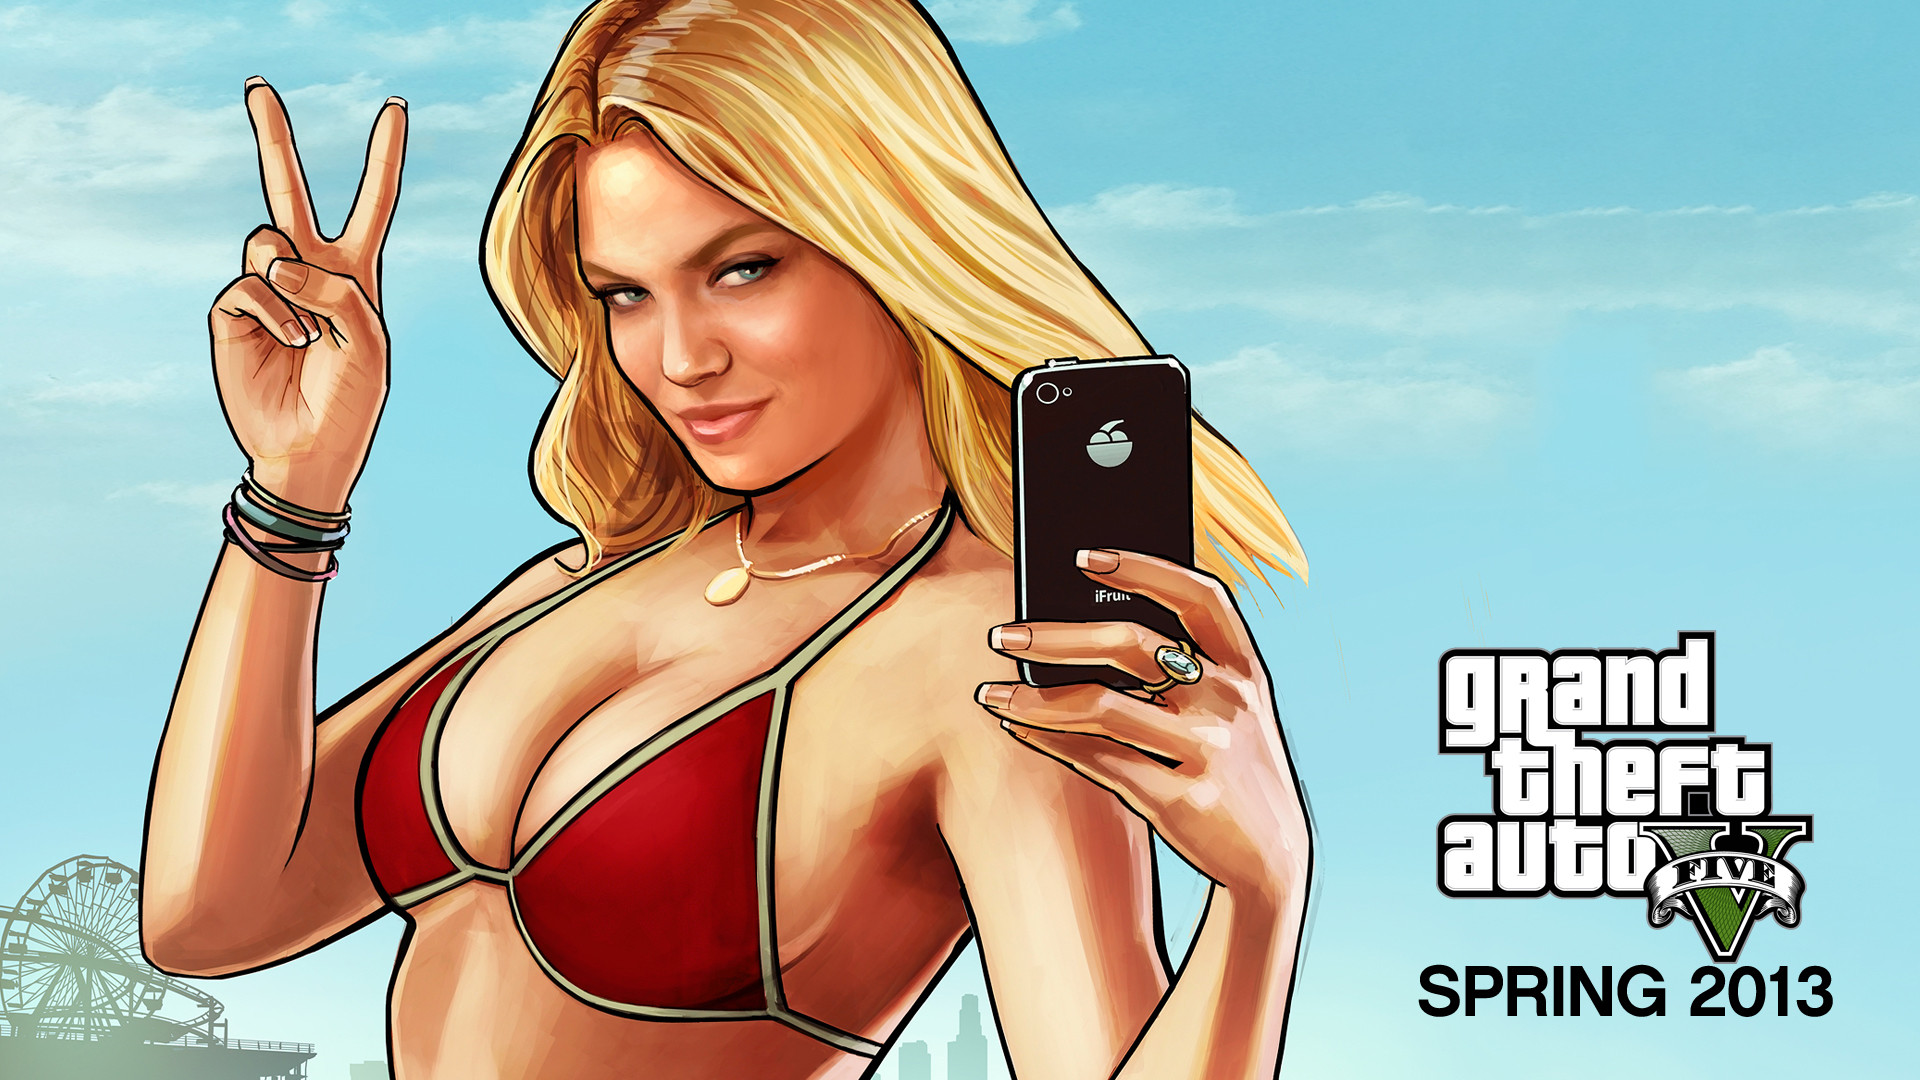 1920x1080 Grand Theft Auto GTA 5 Girl Character Wallpaper HD Wallpaper Grand Theft  Auto GTsadadsaA 5